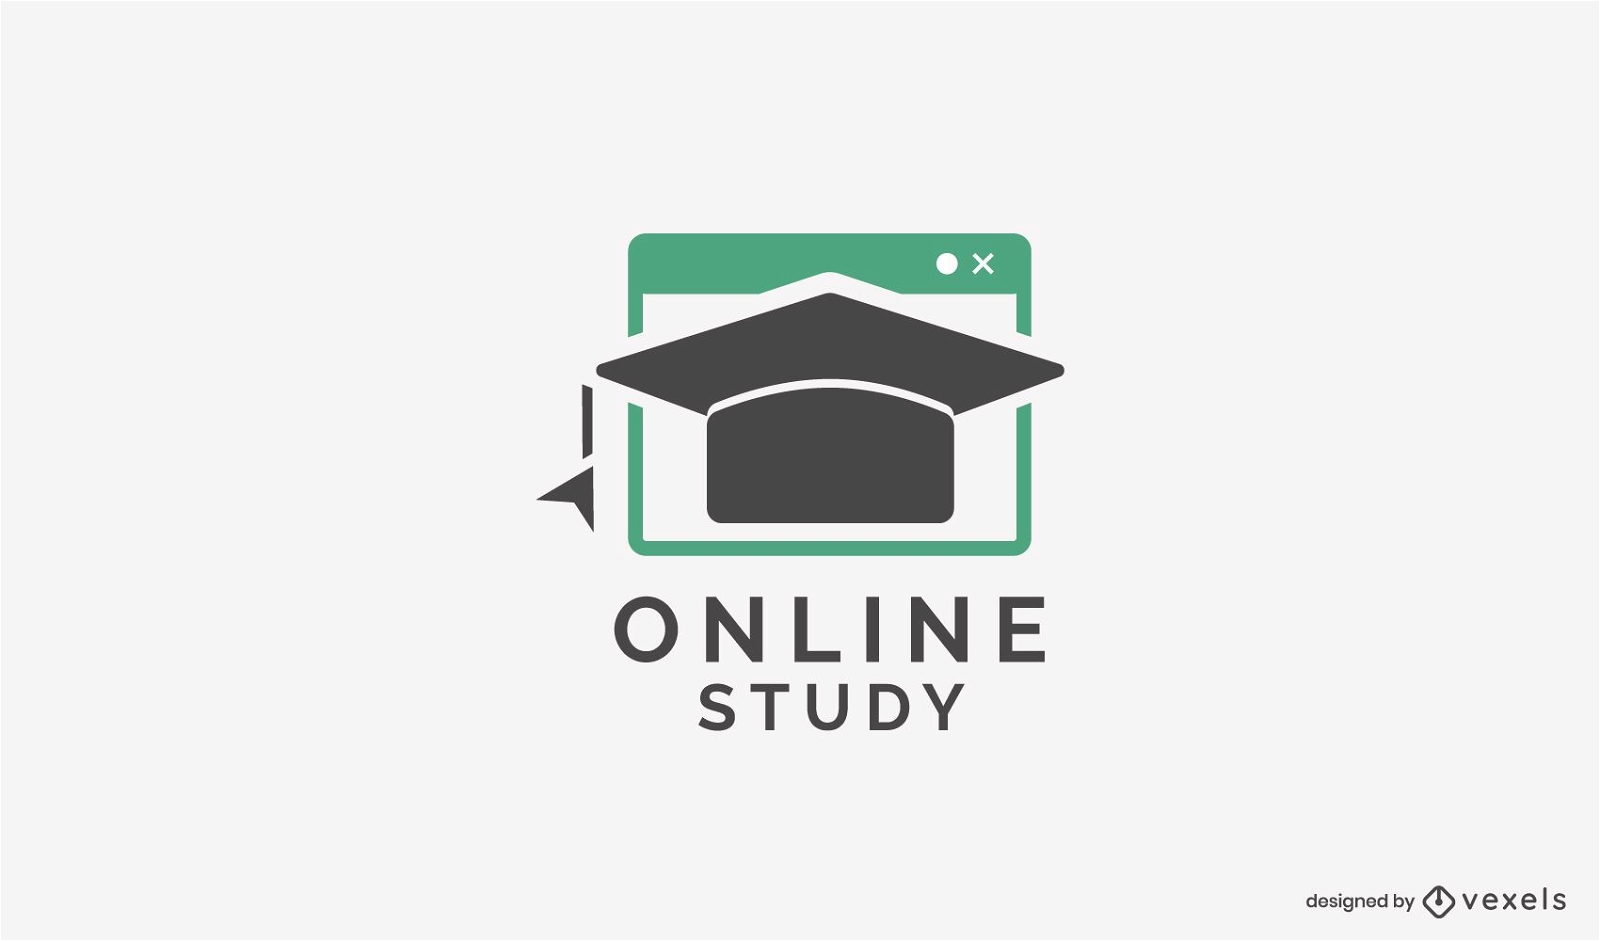 Online Study Logo PNG Transparent Images Free Download | Vector Files |  Pngtree